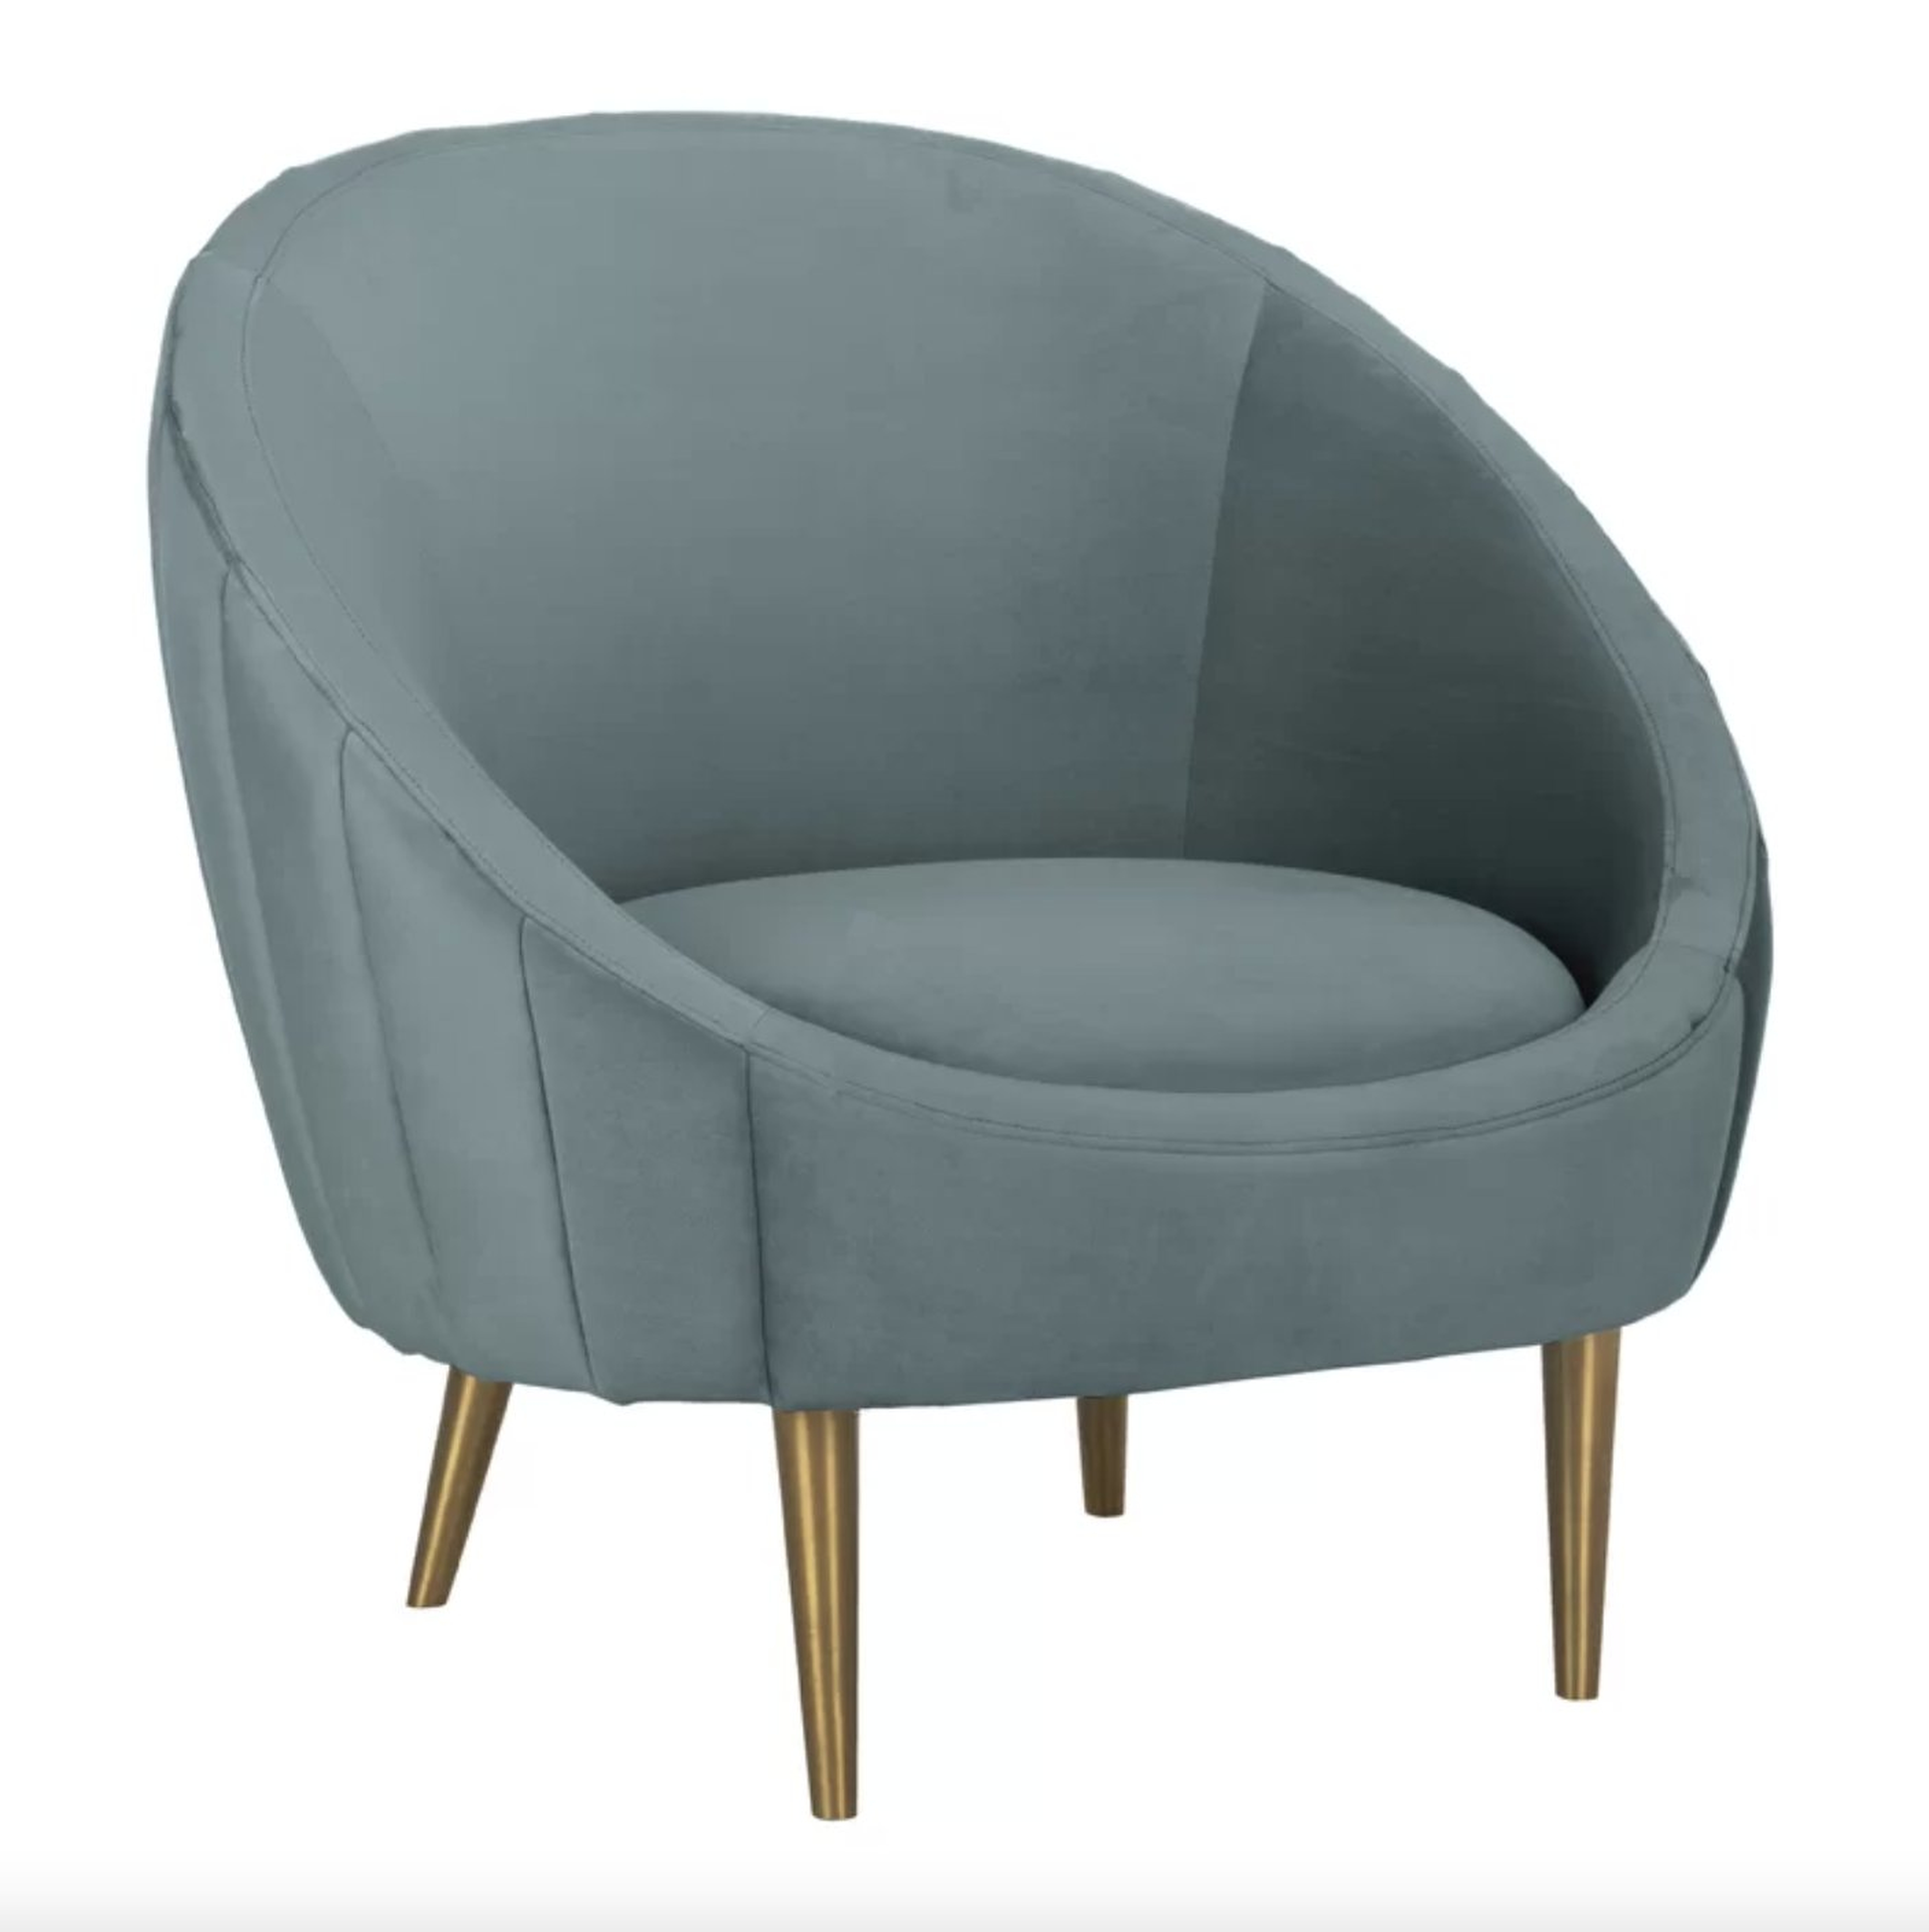 Safavieh Couture Razia Tufted Barrel Chair Upholstery: Seafoam - Perigold